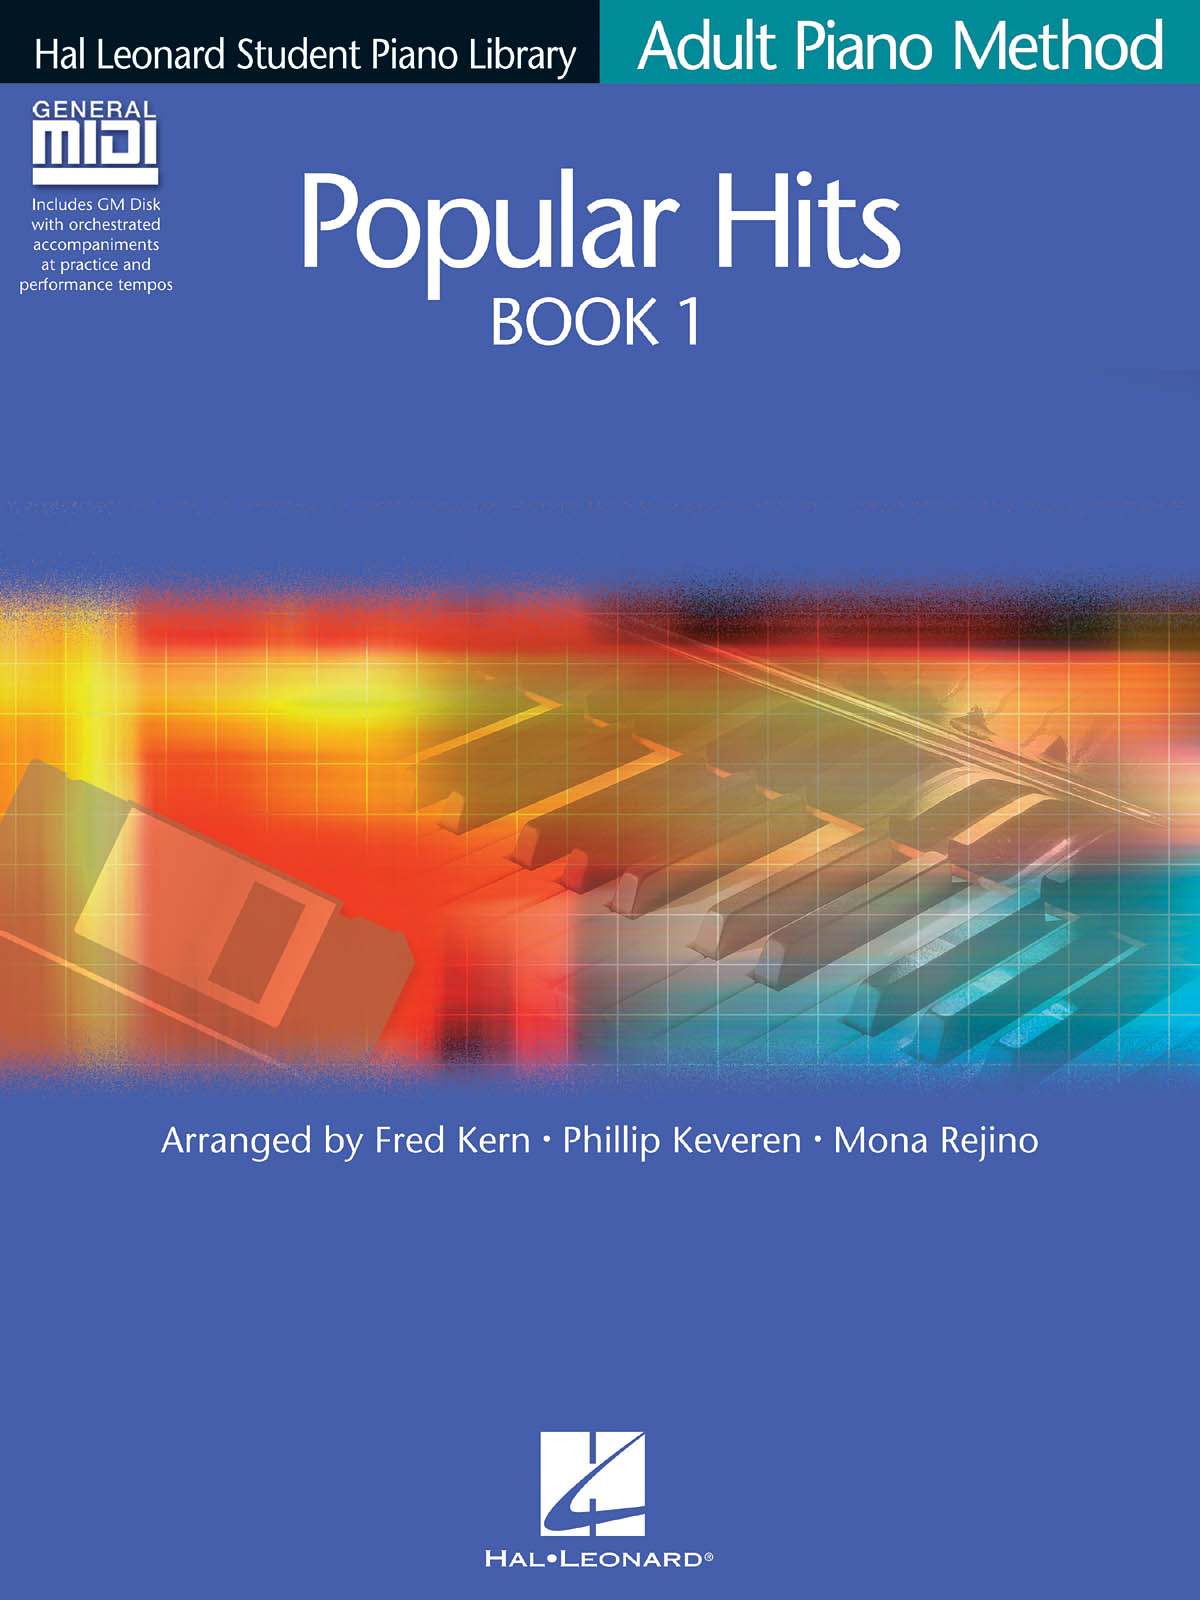 Popular Hits Book 1 - Book/GM Disk Pack: Piano: Instrumental Album